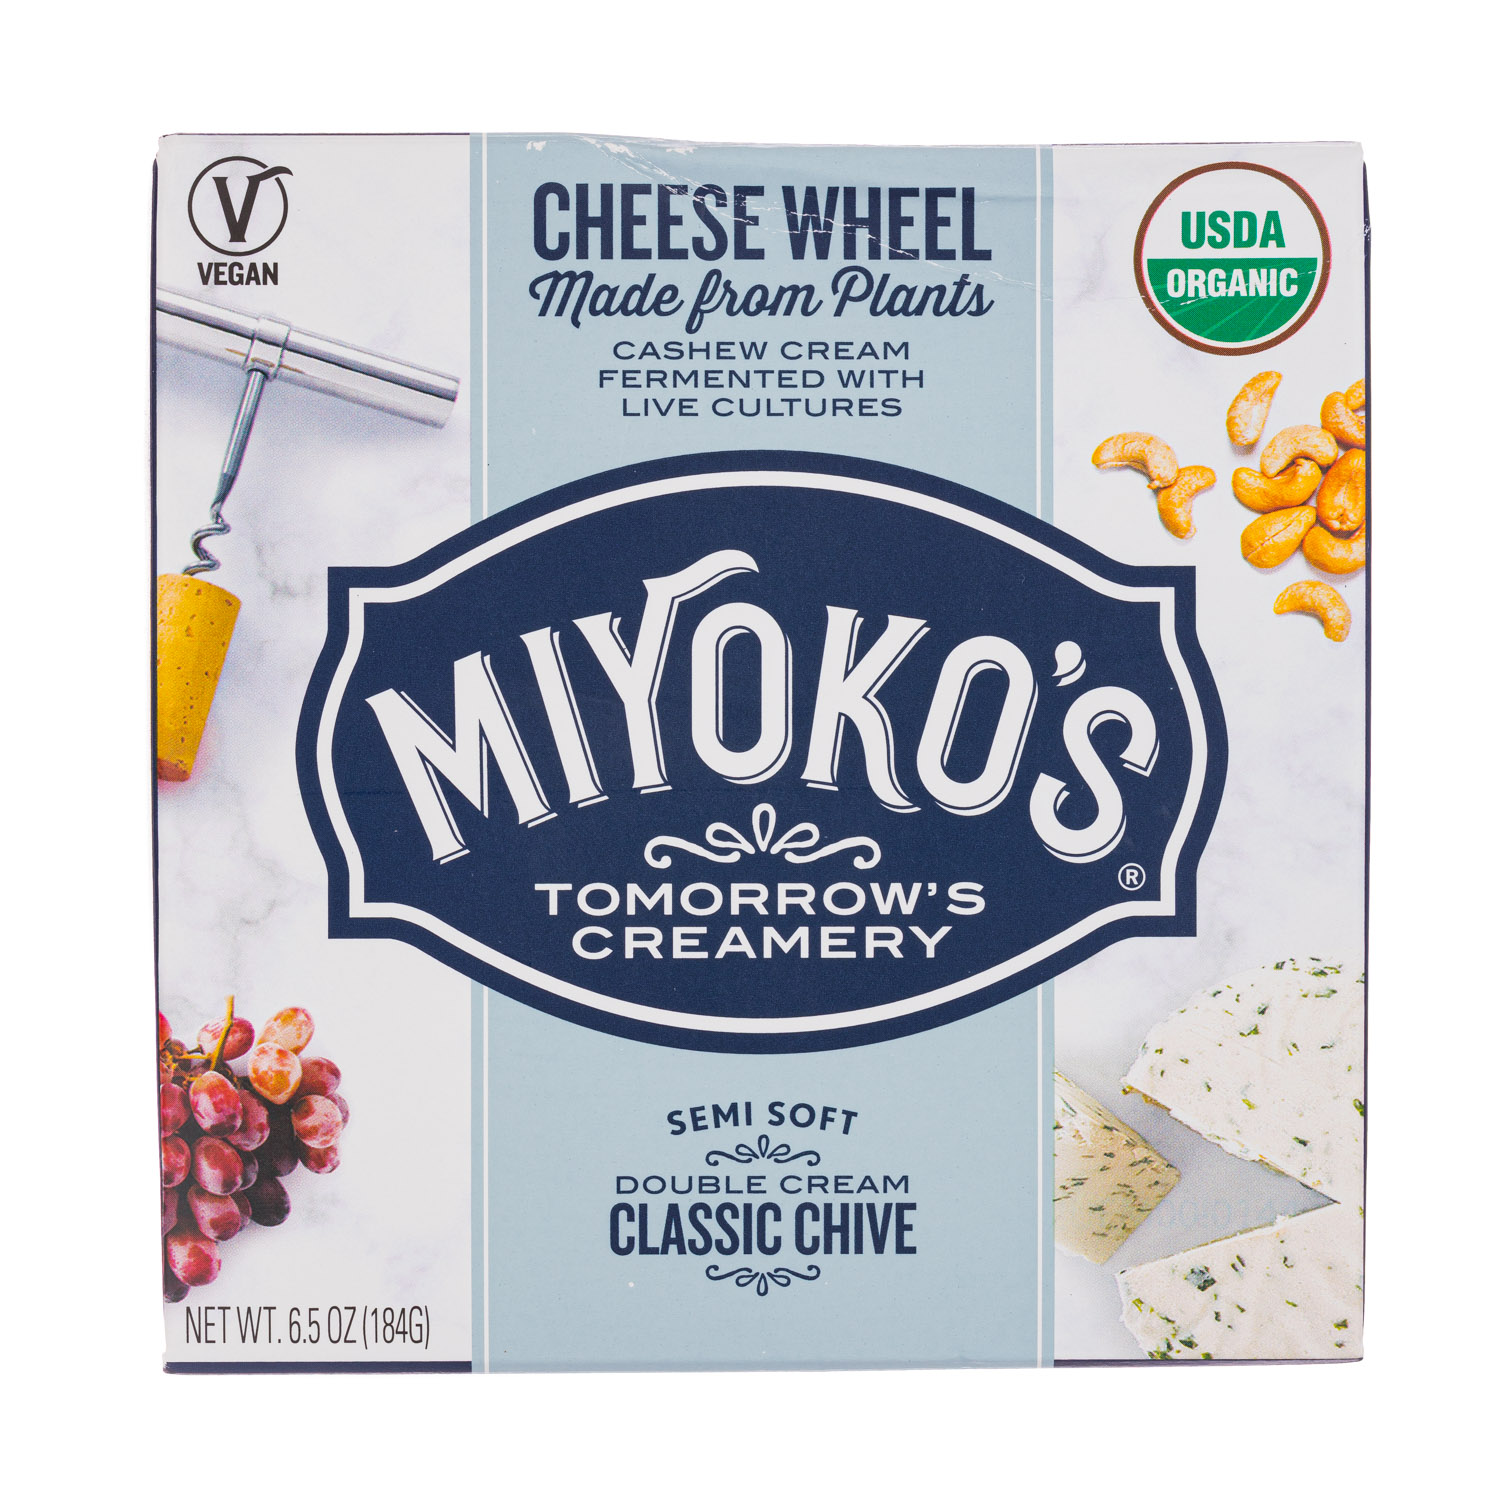 Cheese Wheel - Classic Chive 2020